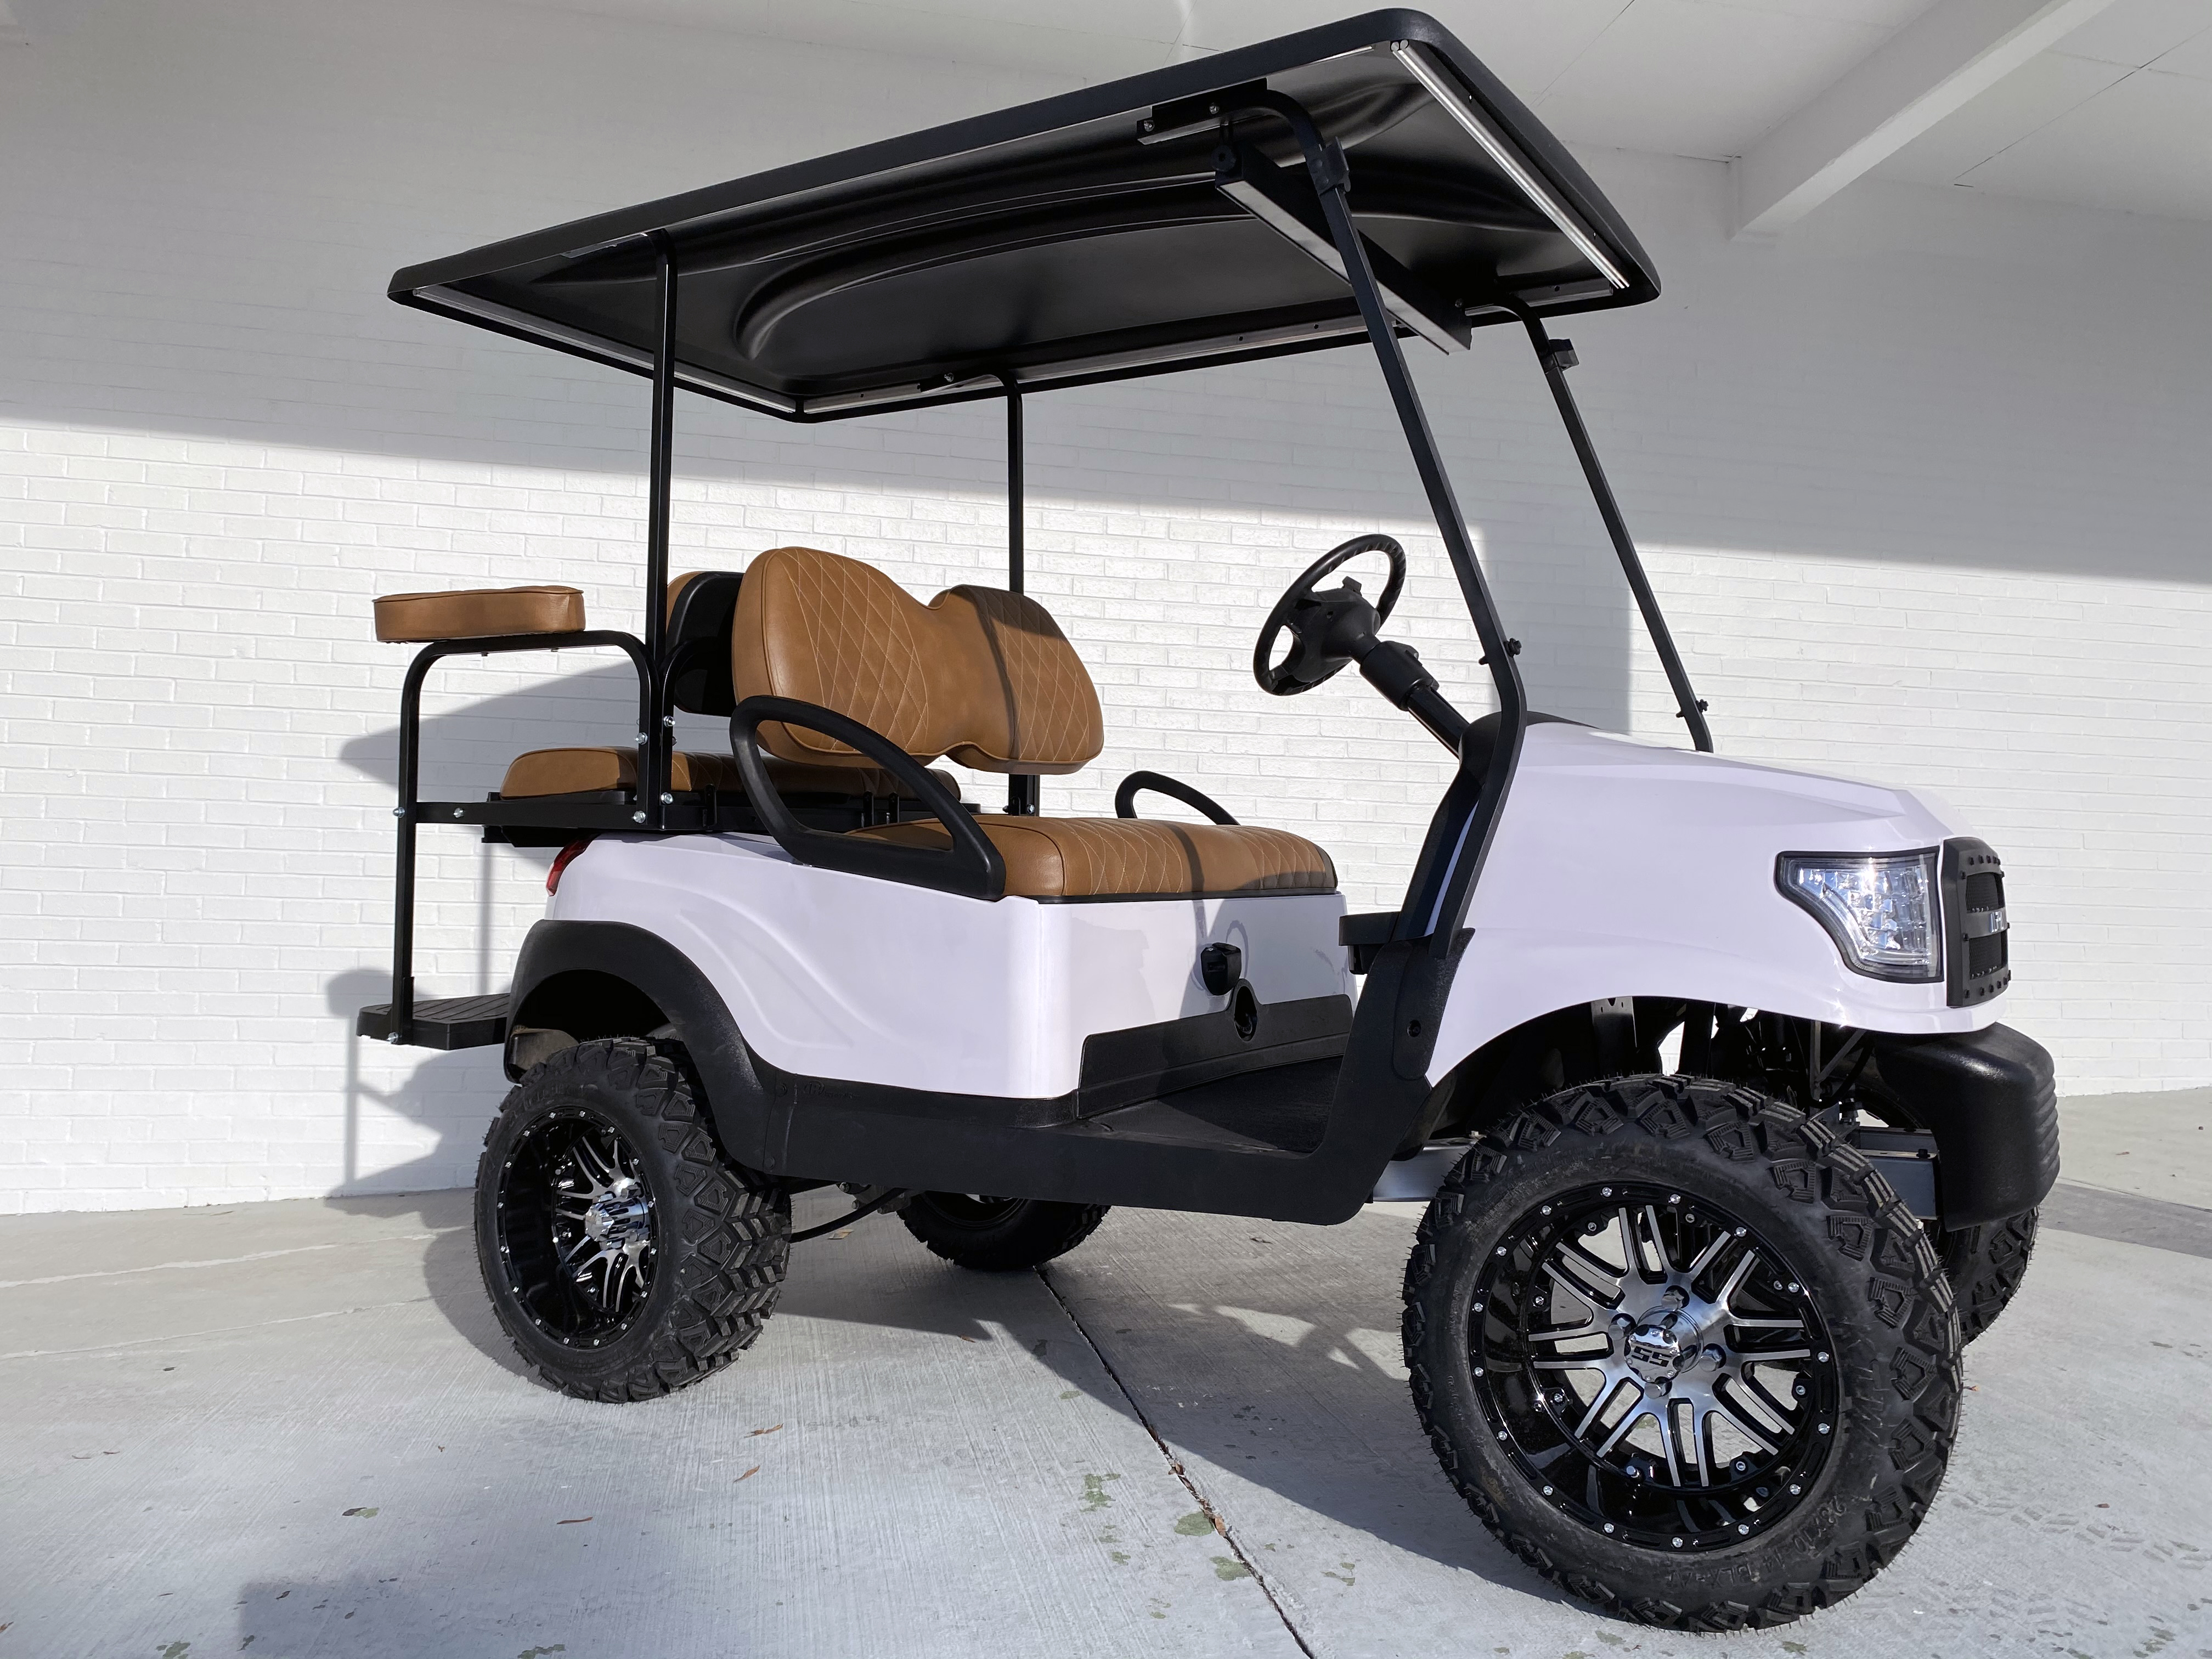 Golf Cart Seats Club Car